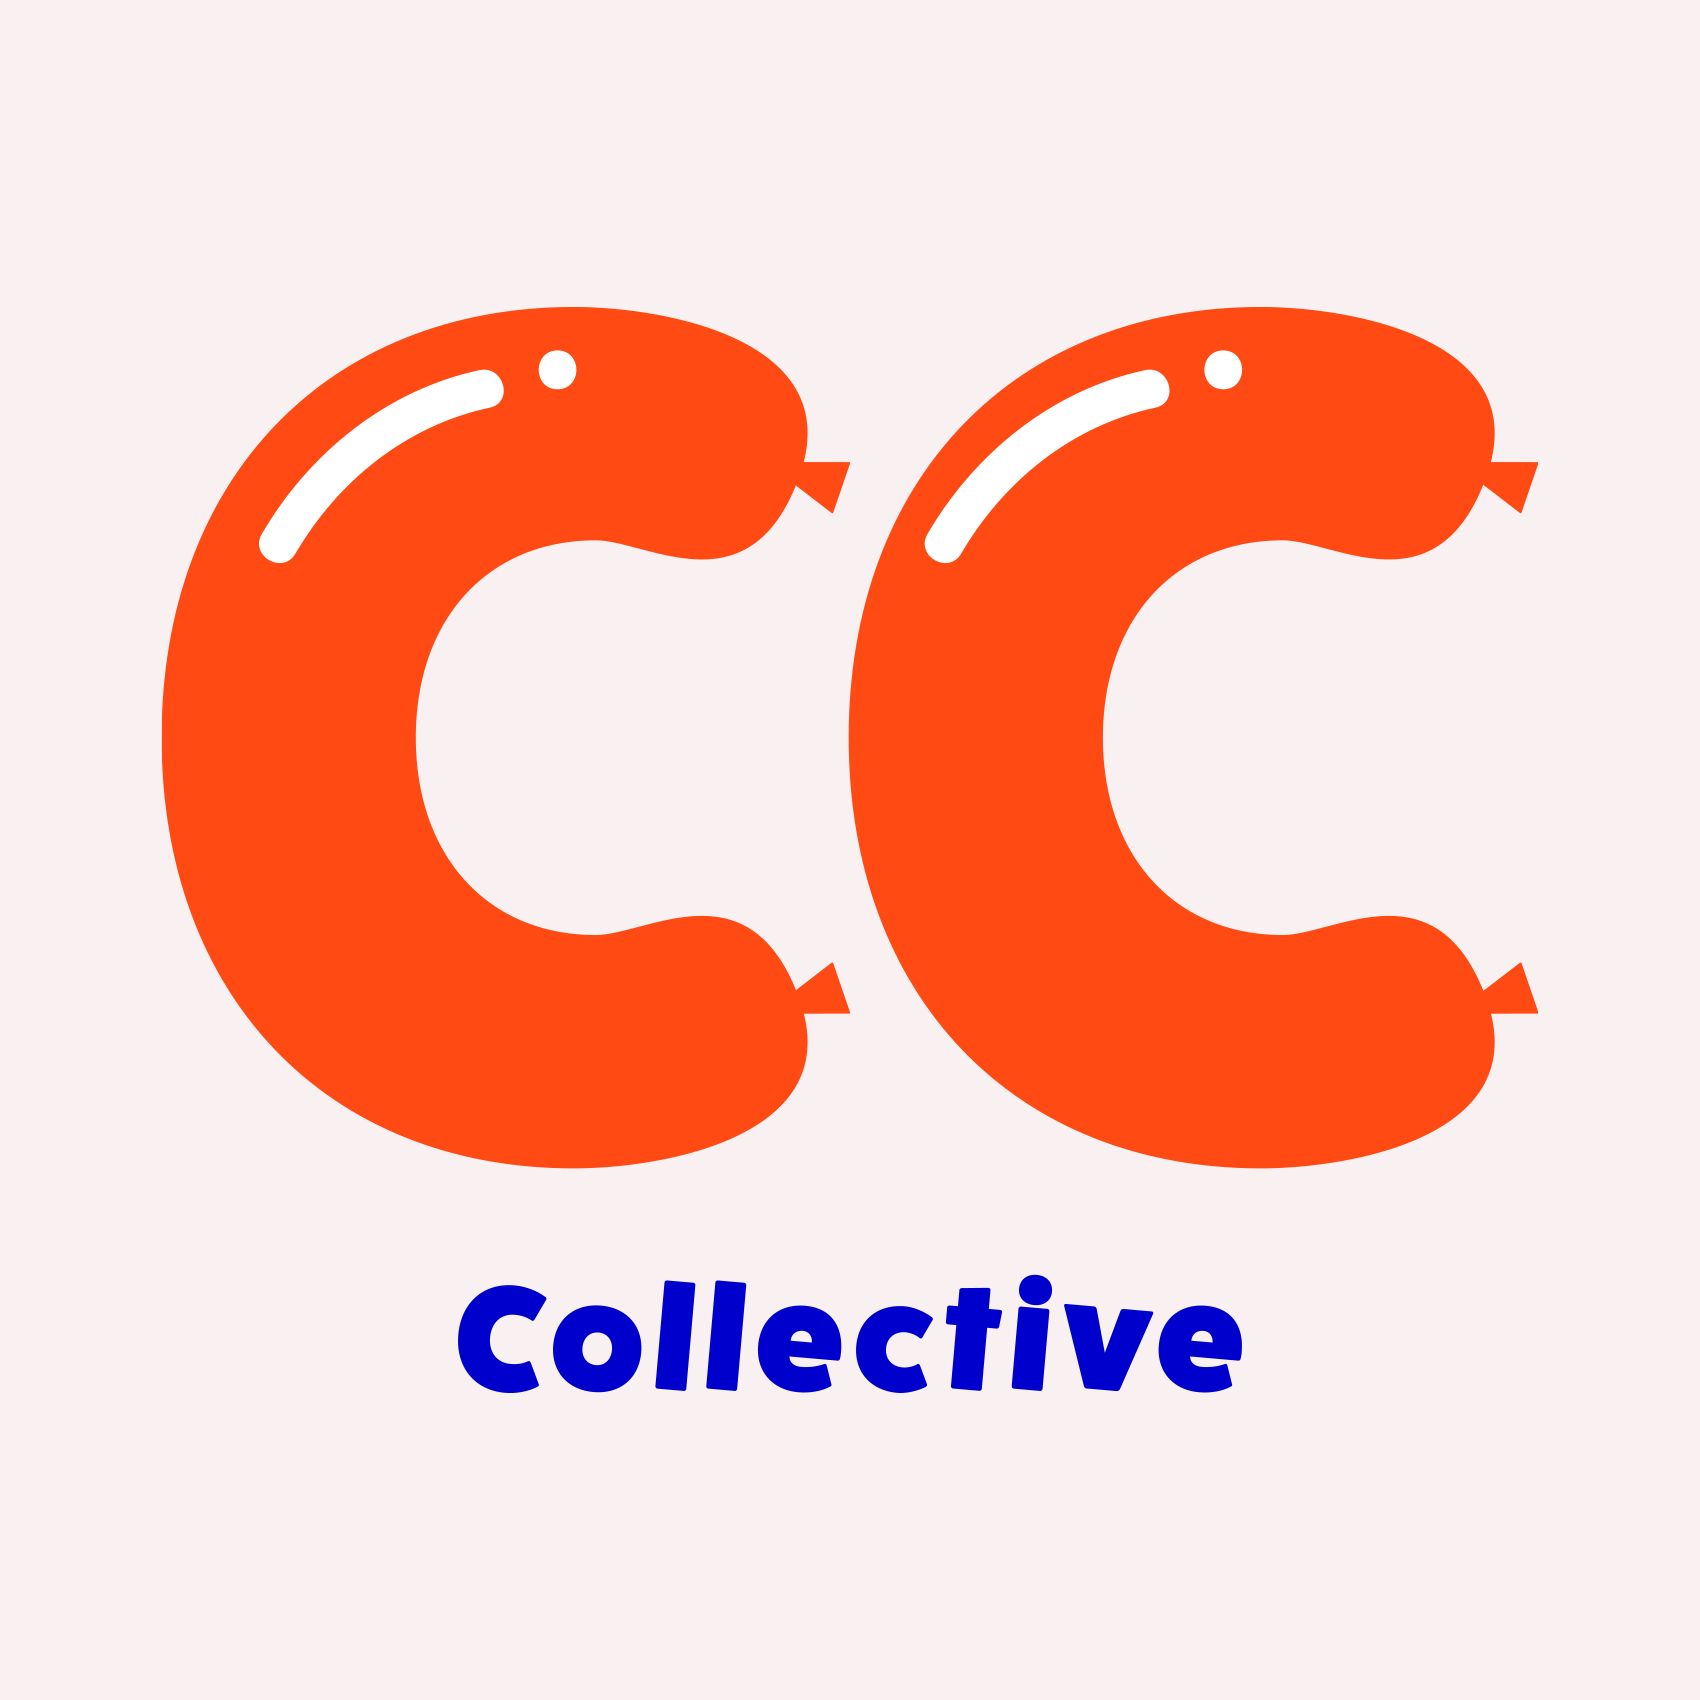 cc_logo_3